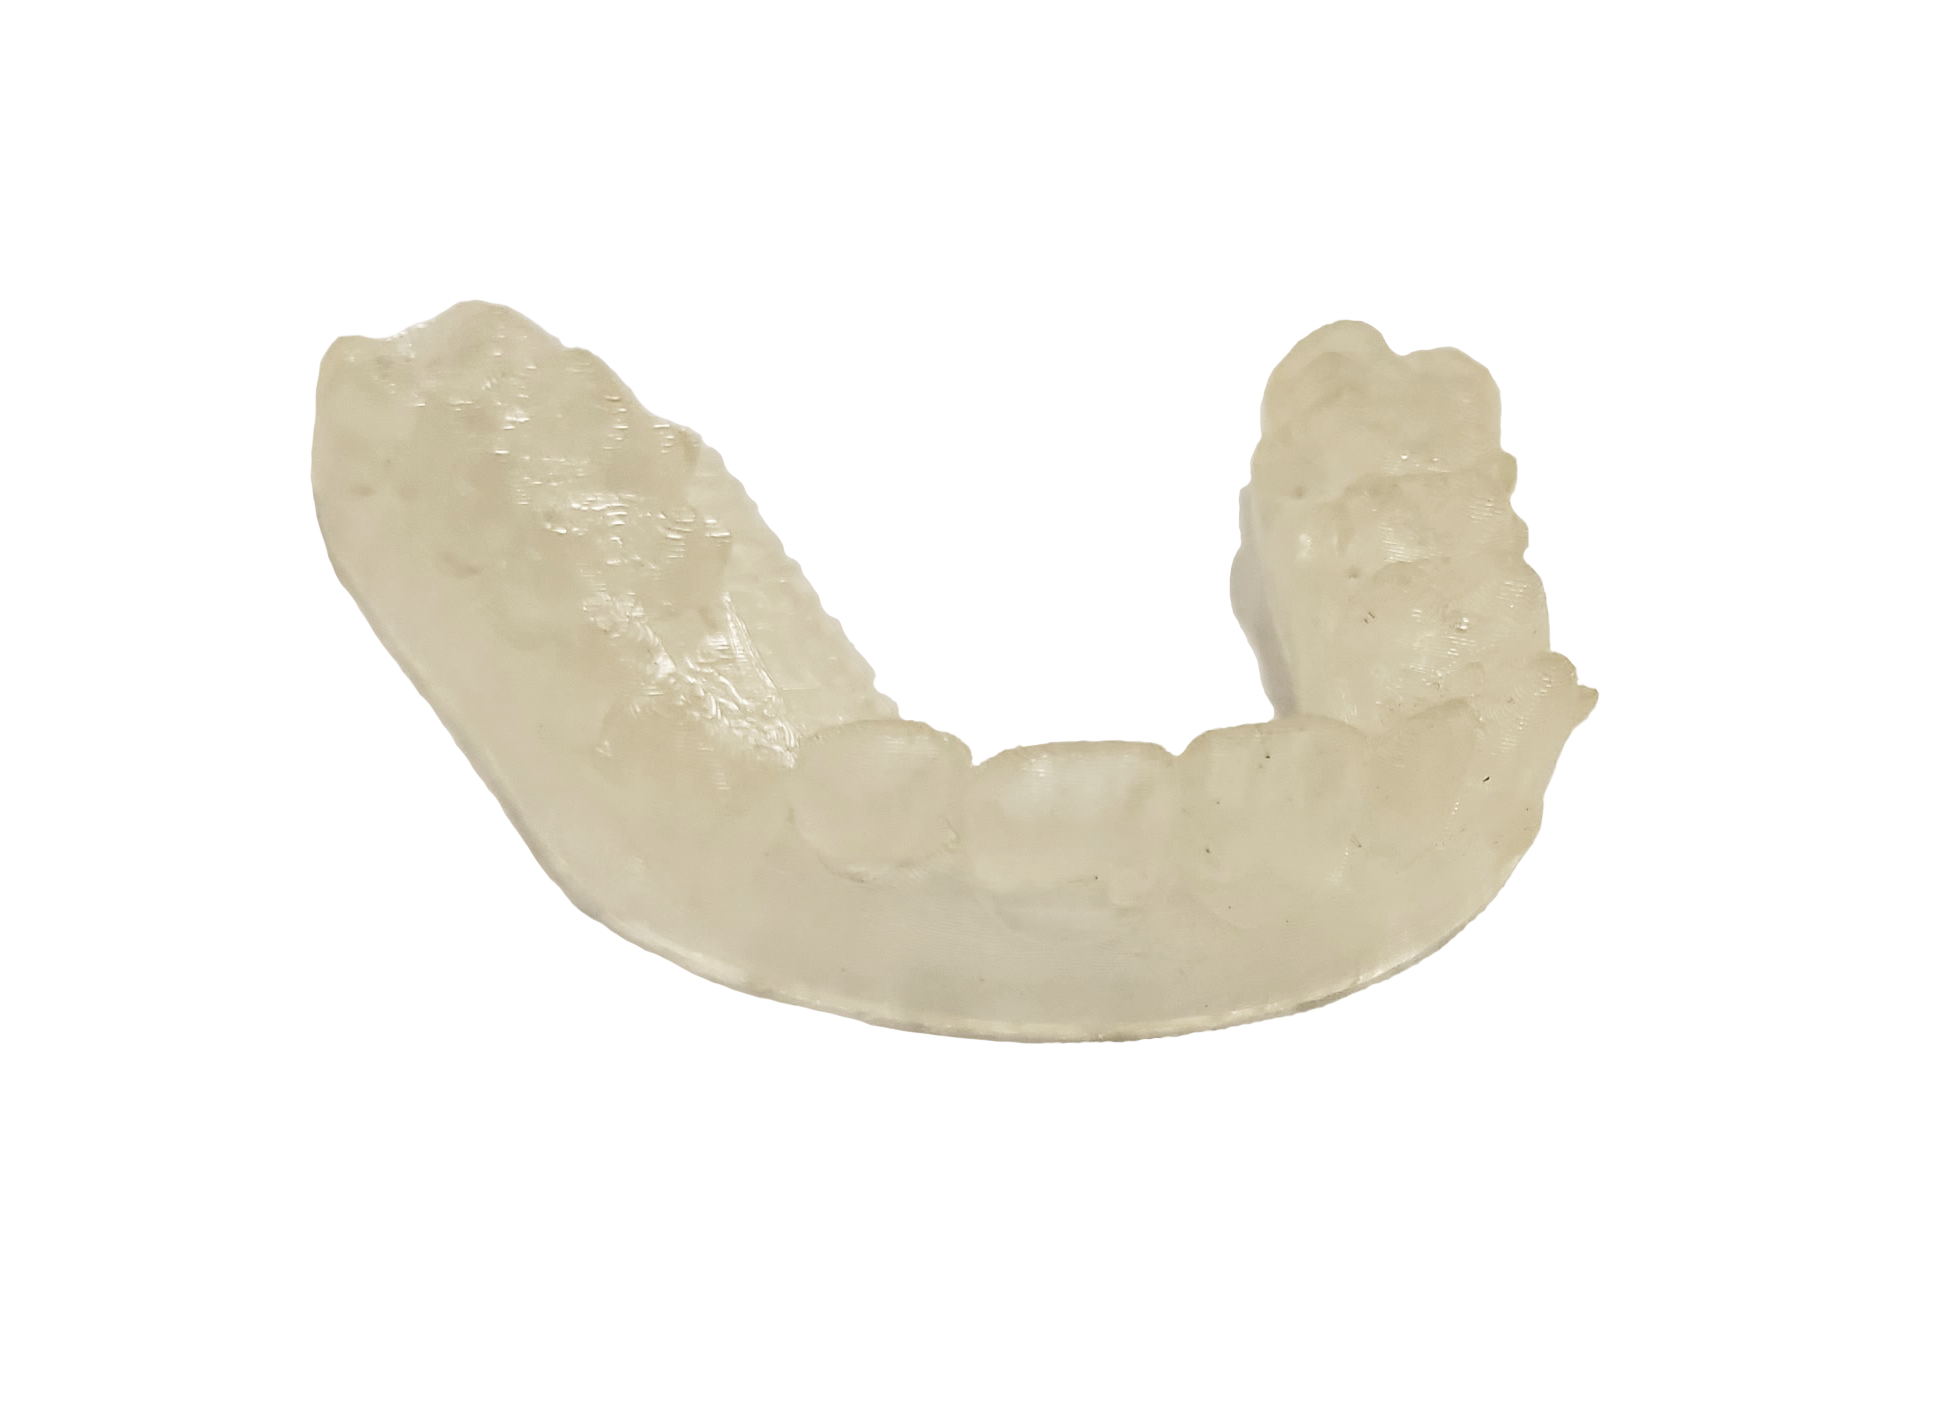 Bixby Dental Molded Form of Teeth